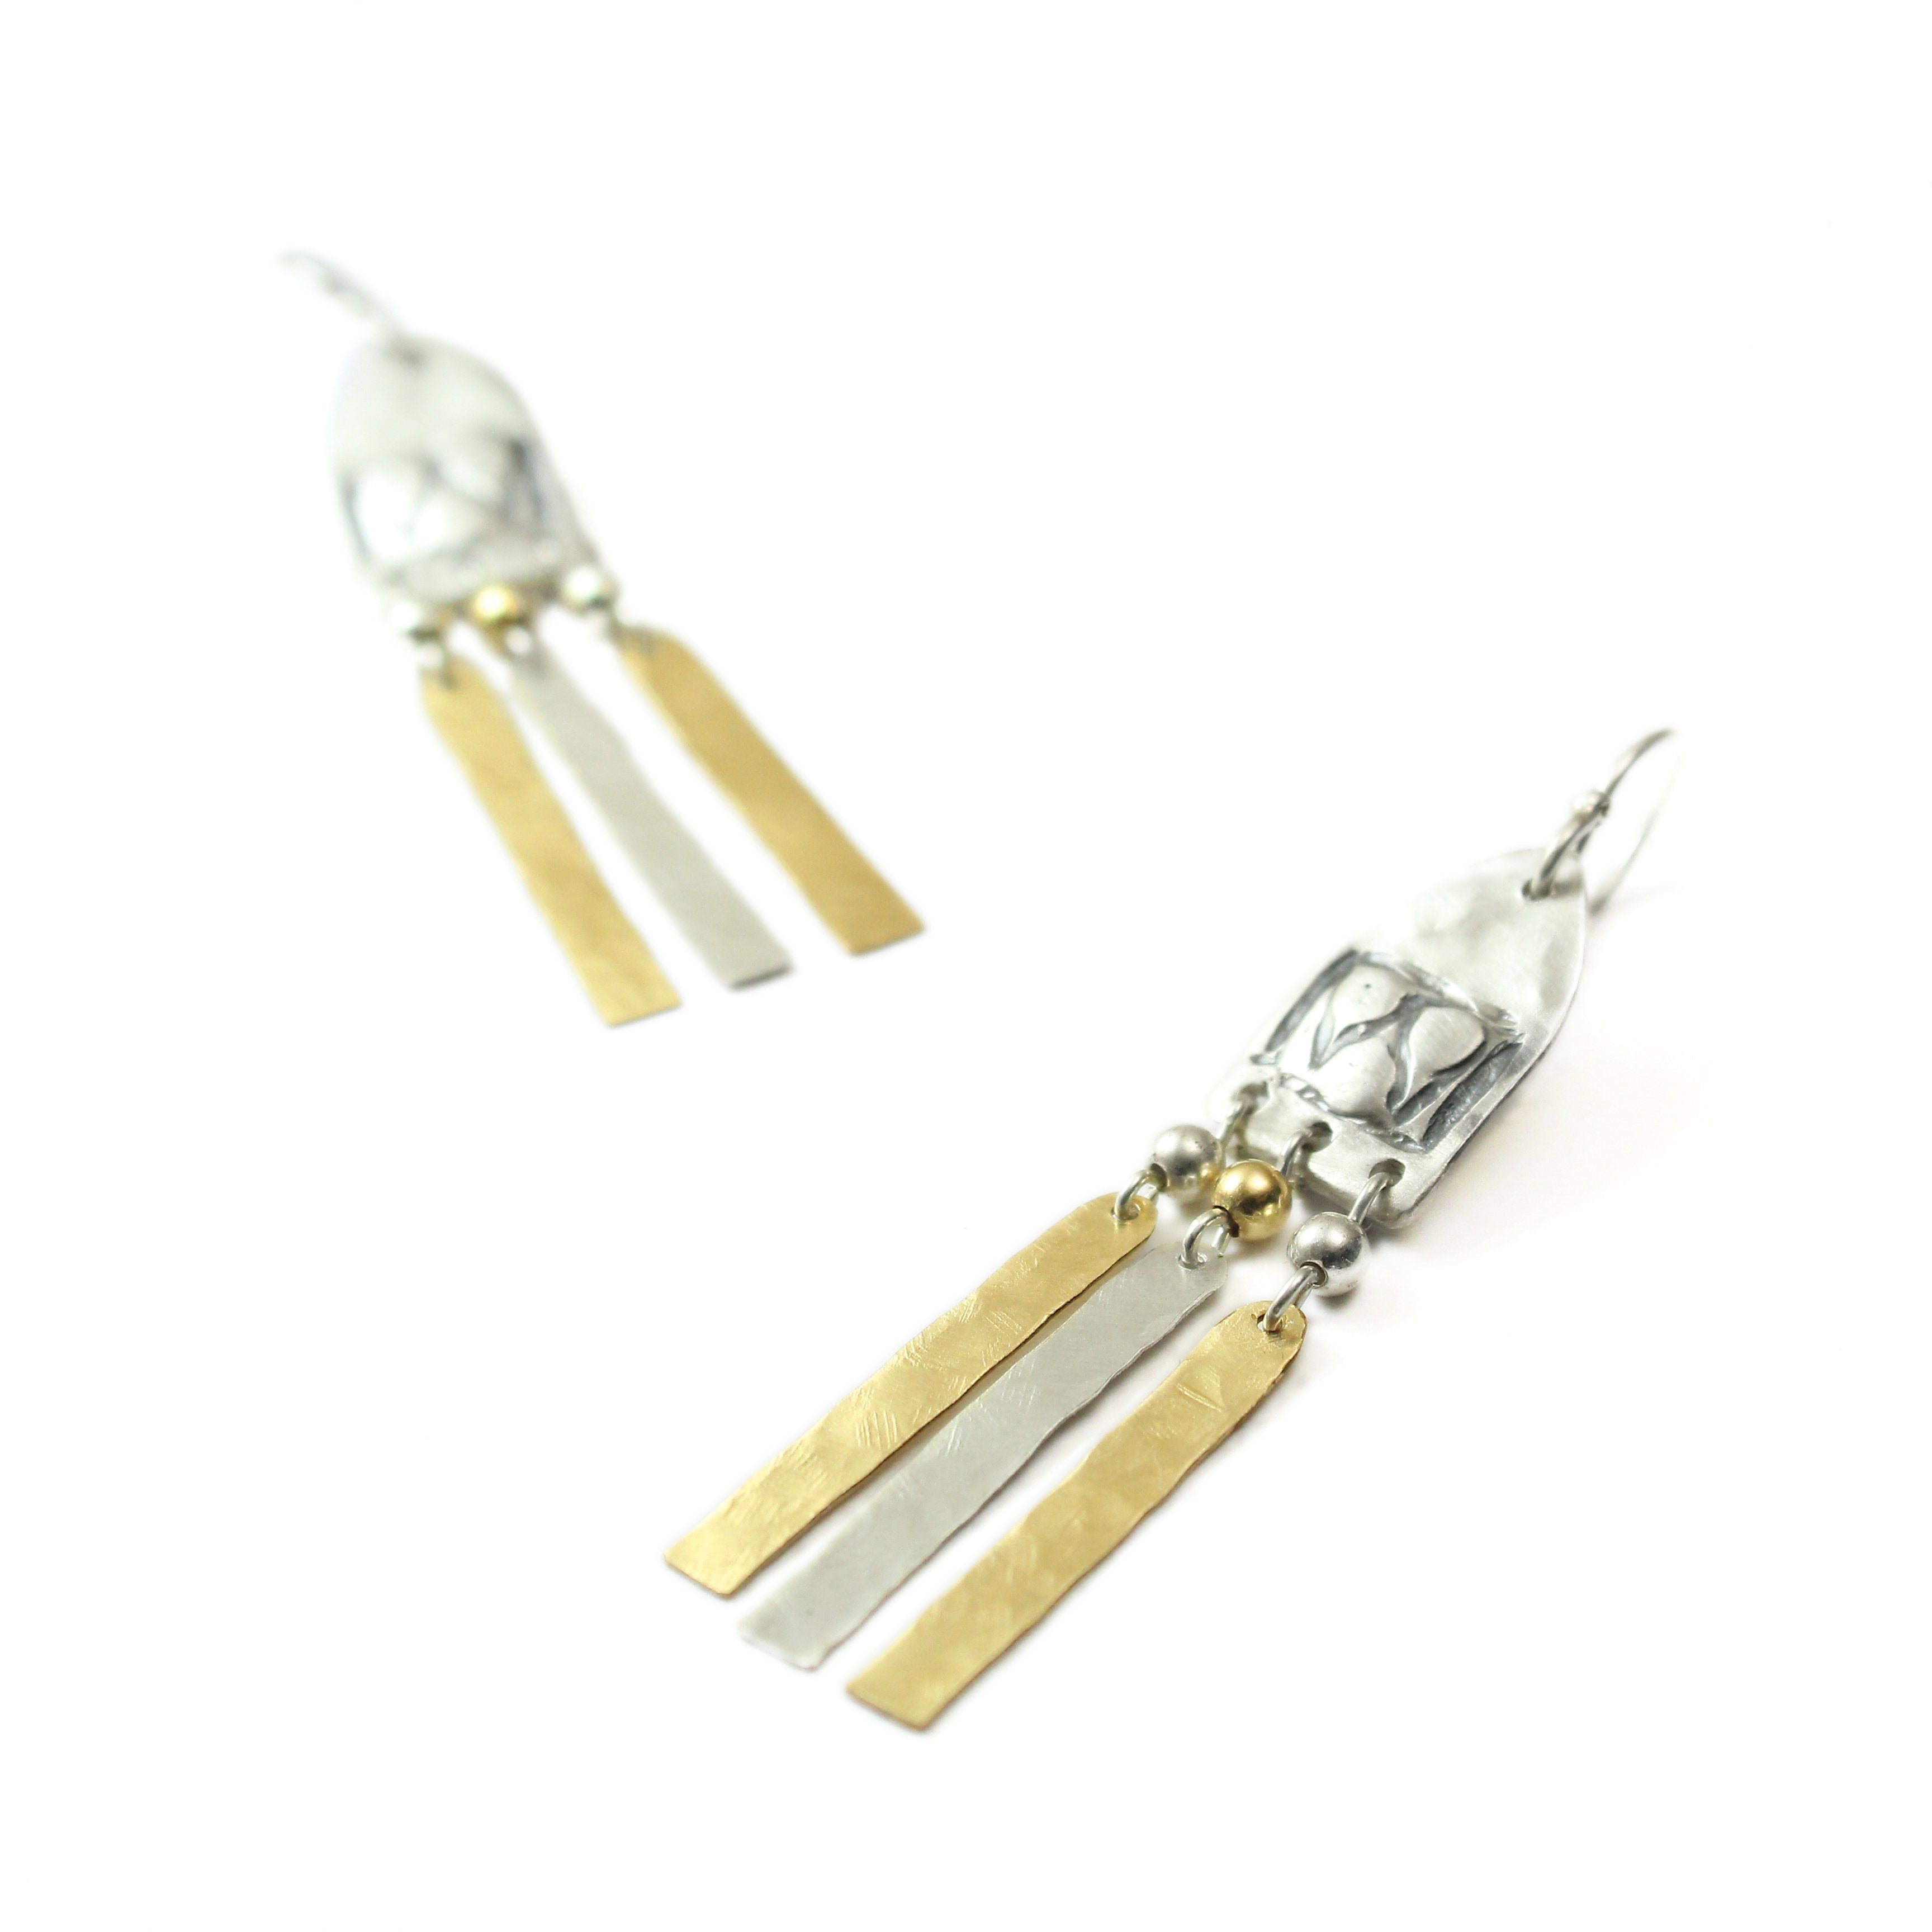 Silver & Gold filled Geometric Medium Size Earrings - Shulamit Kanter